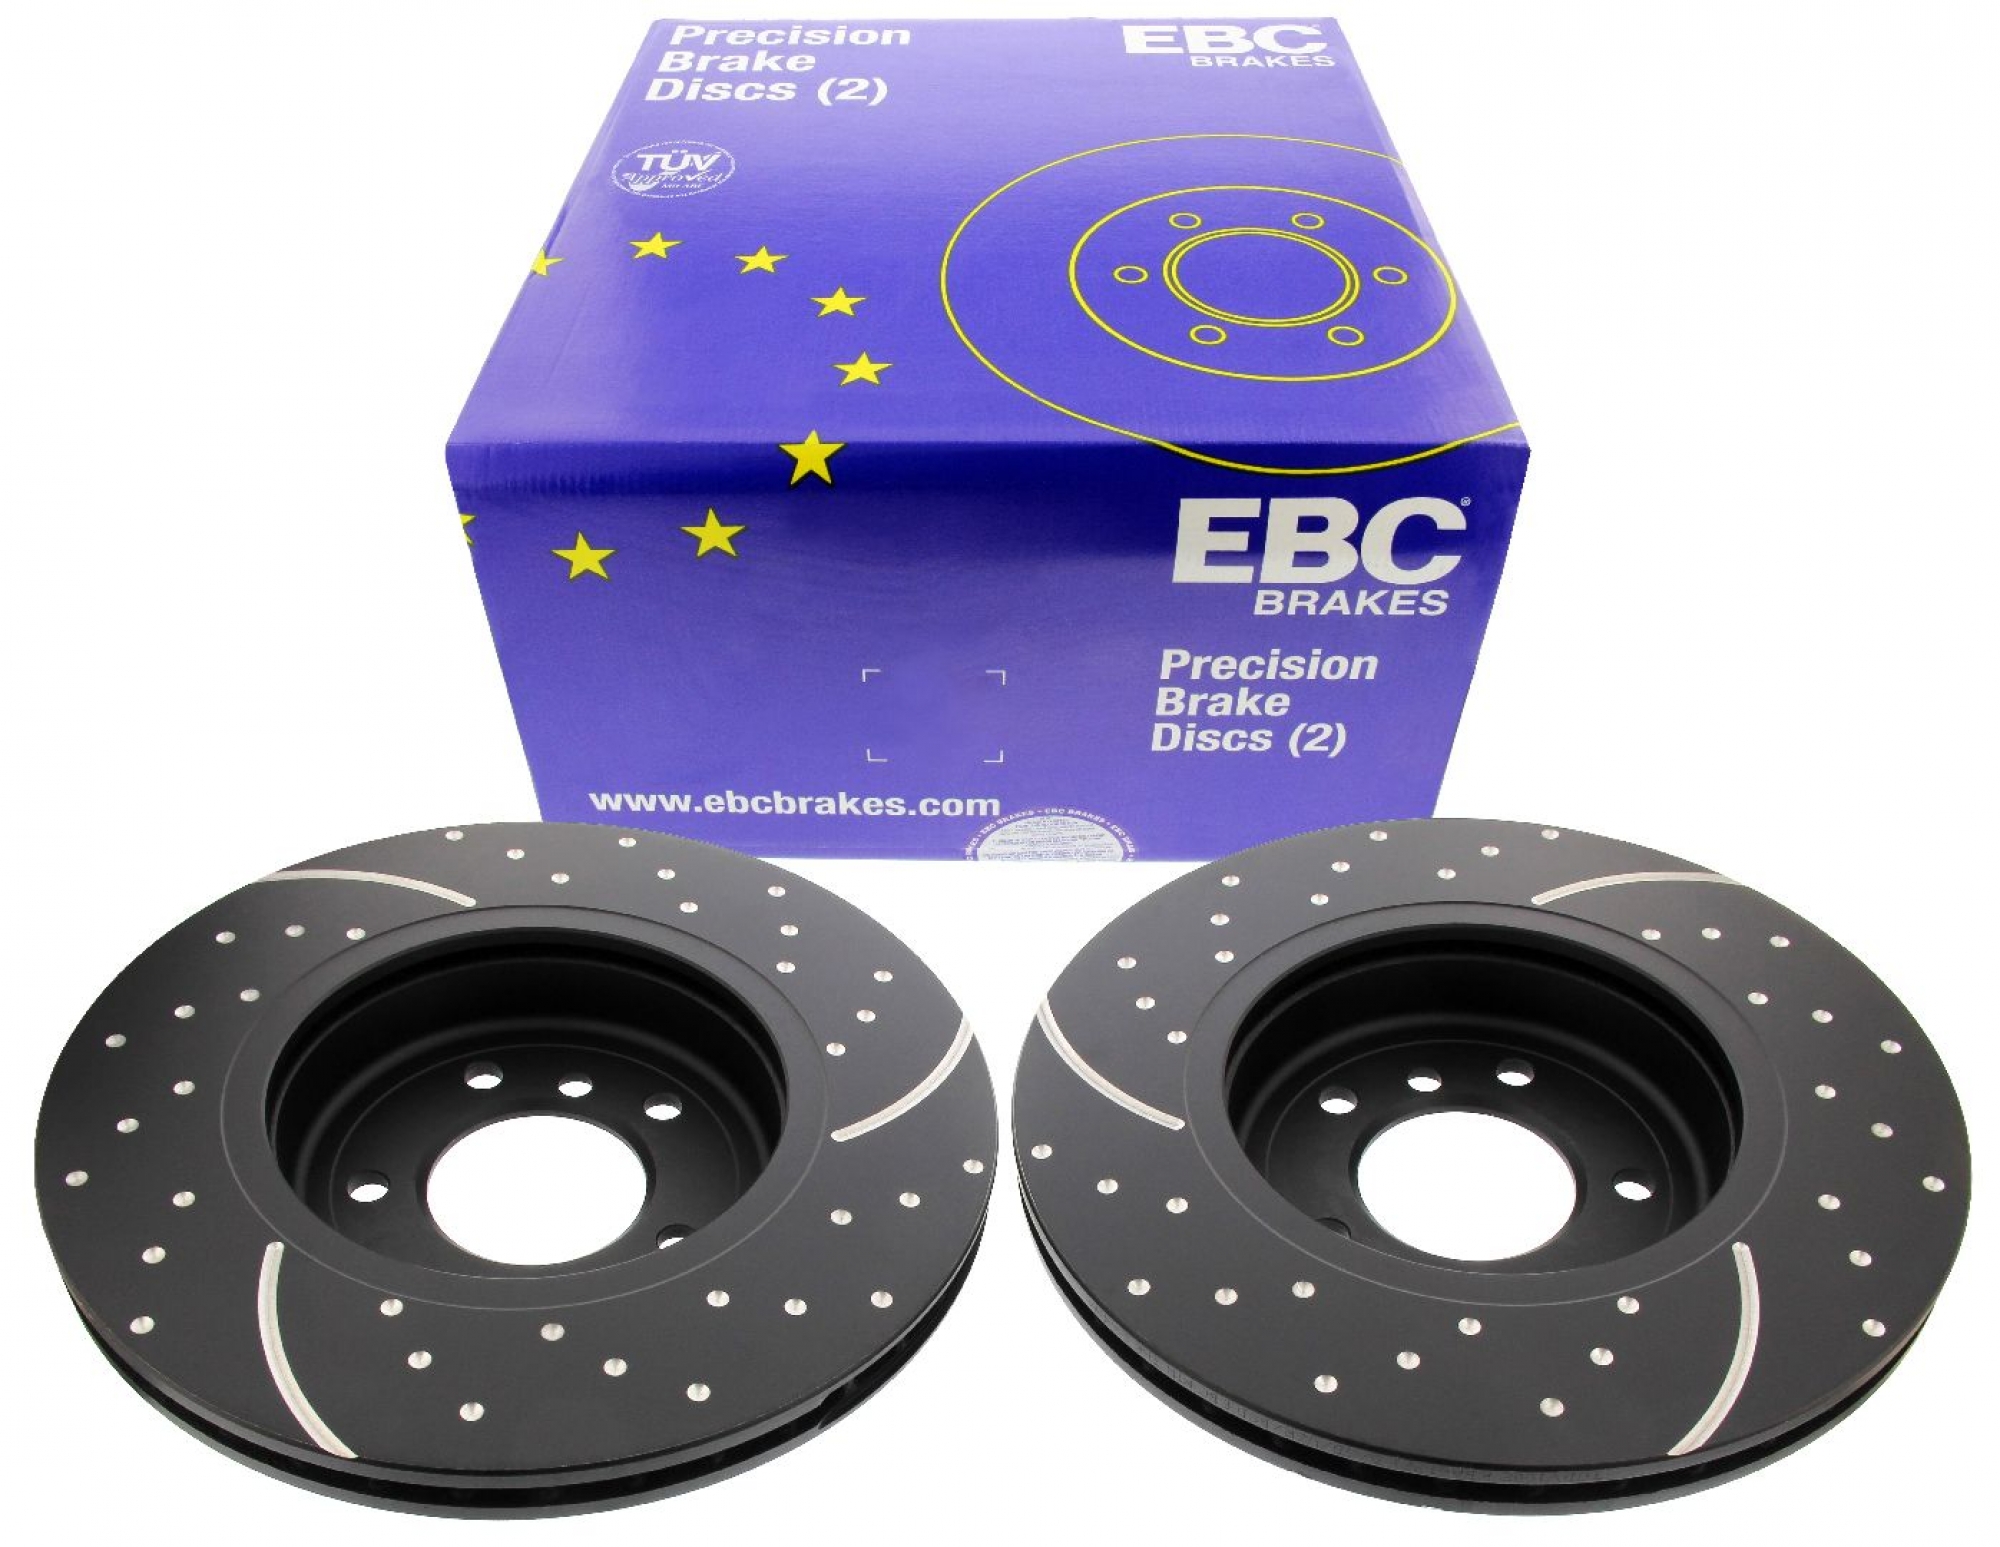 EBC-Bremsscheiben, Turbo Groove Disc Black (2-teilig), VA, BMW Z4, 3